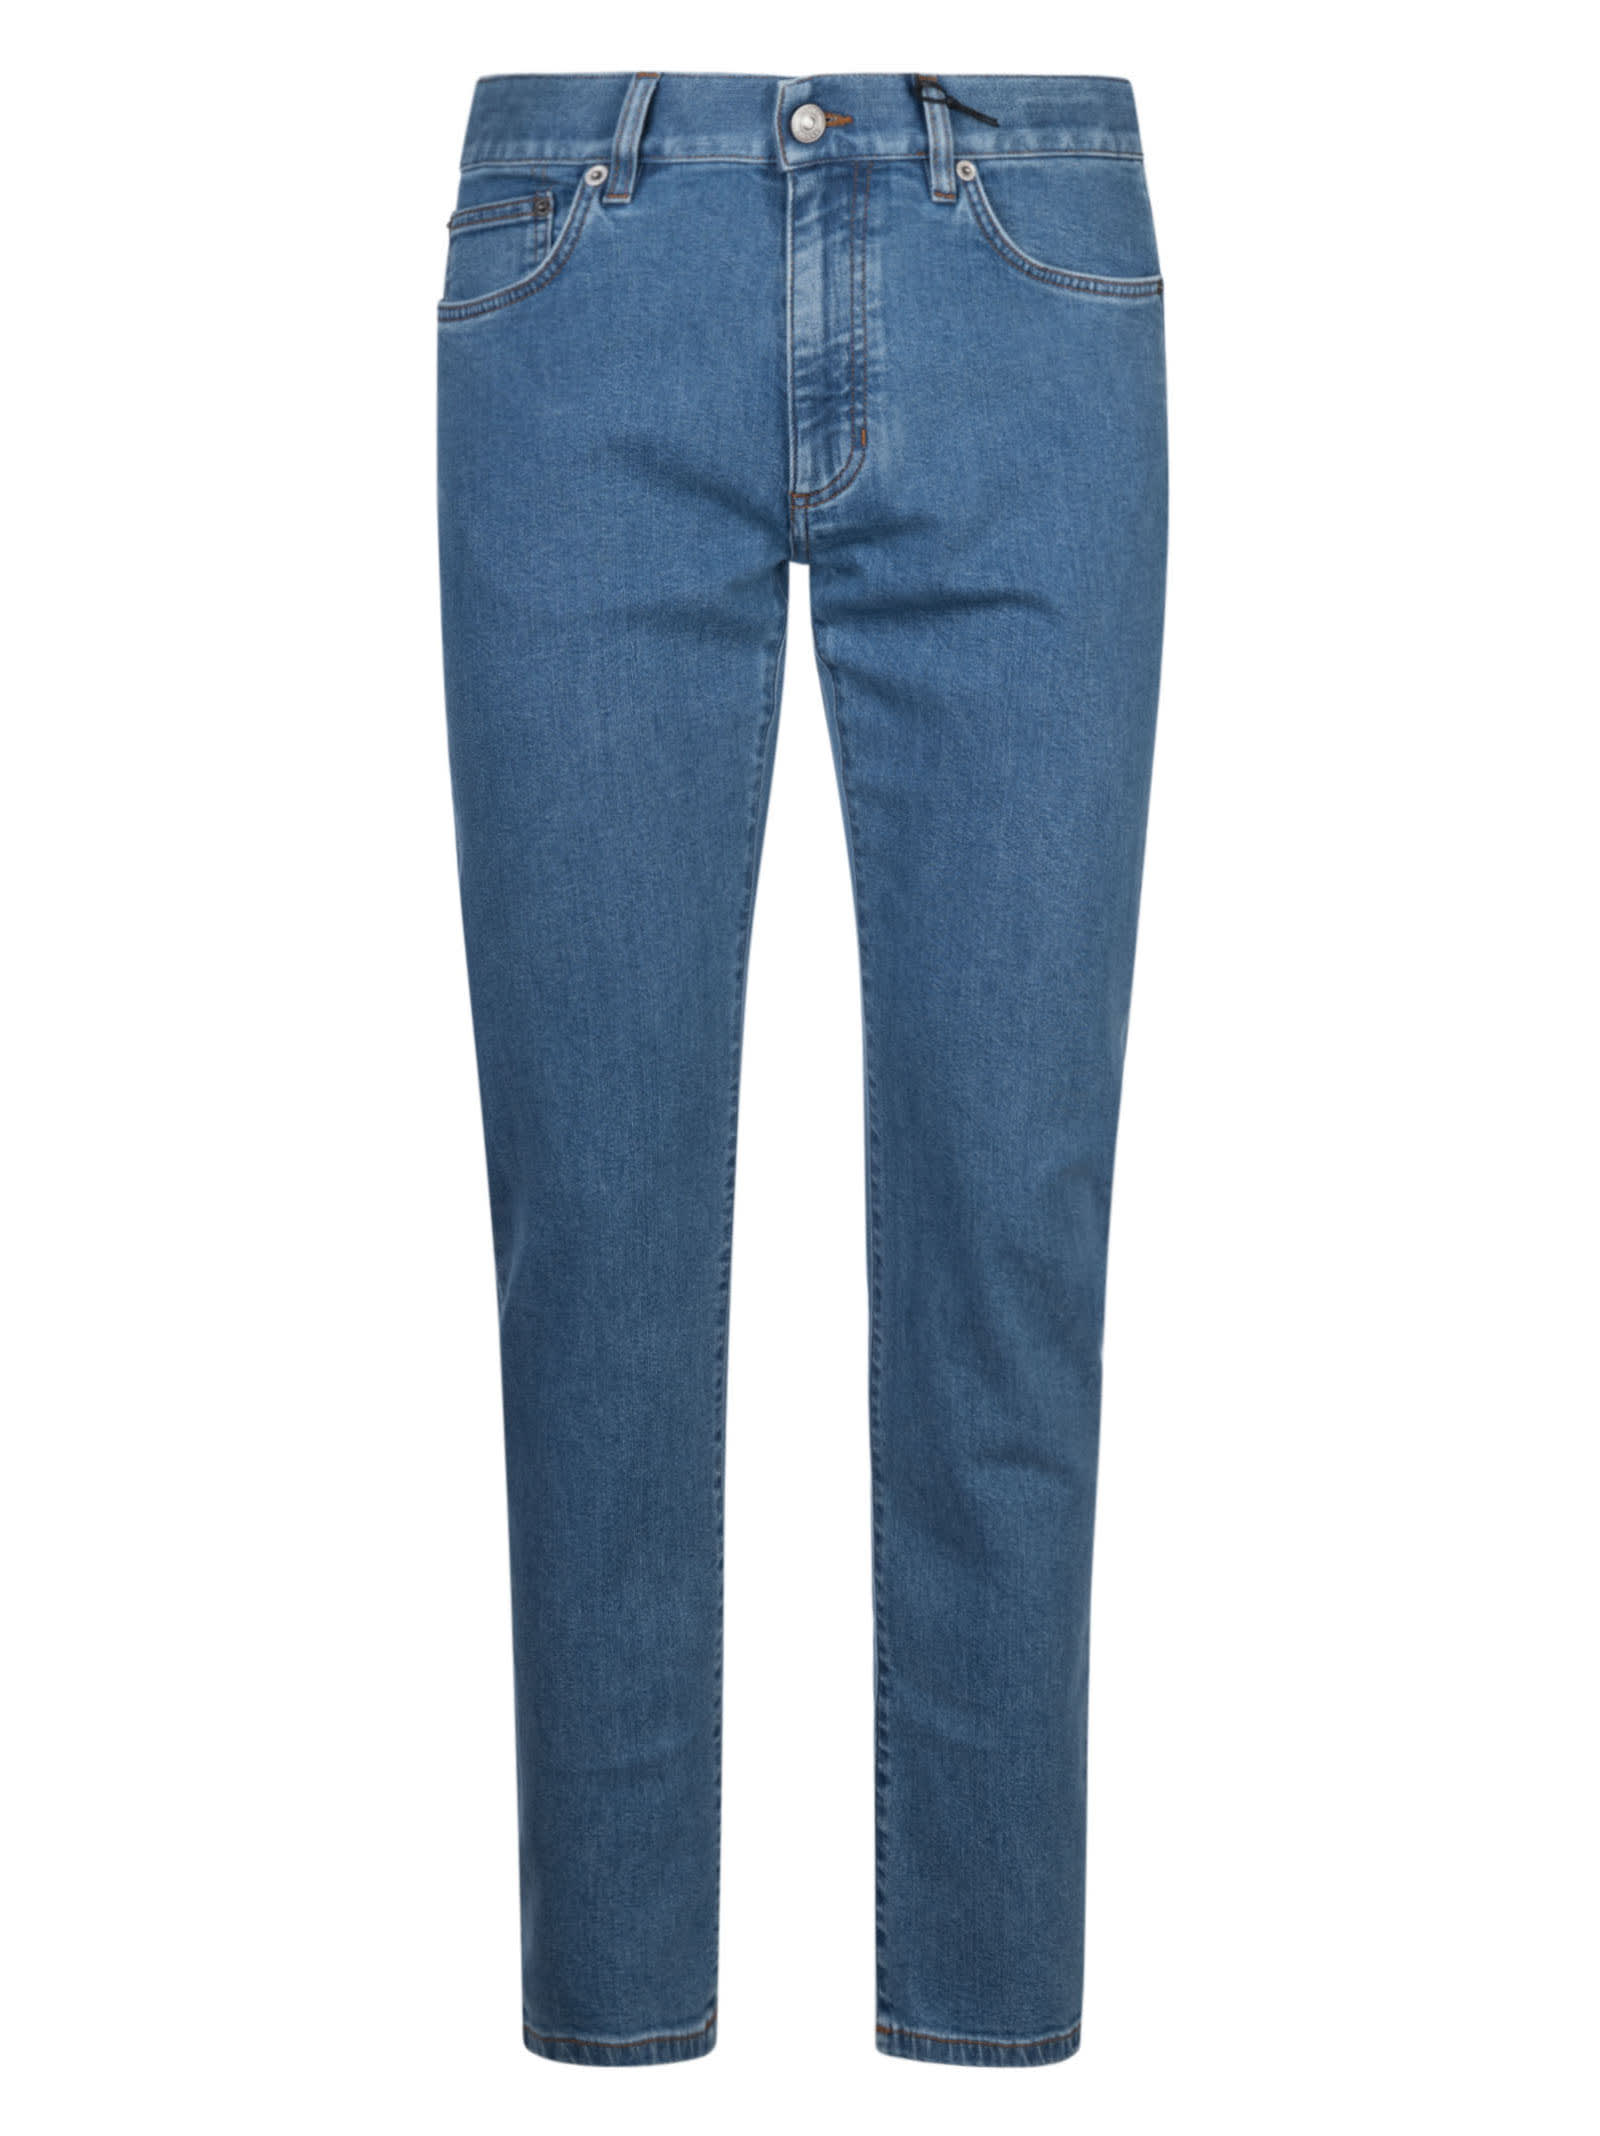 Ermenegildo Zegna Classic 5 Pockets Jeans In Denim